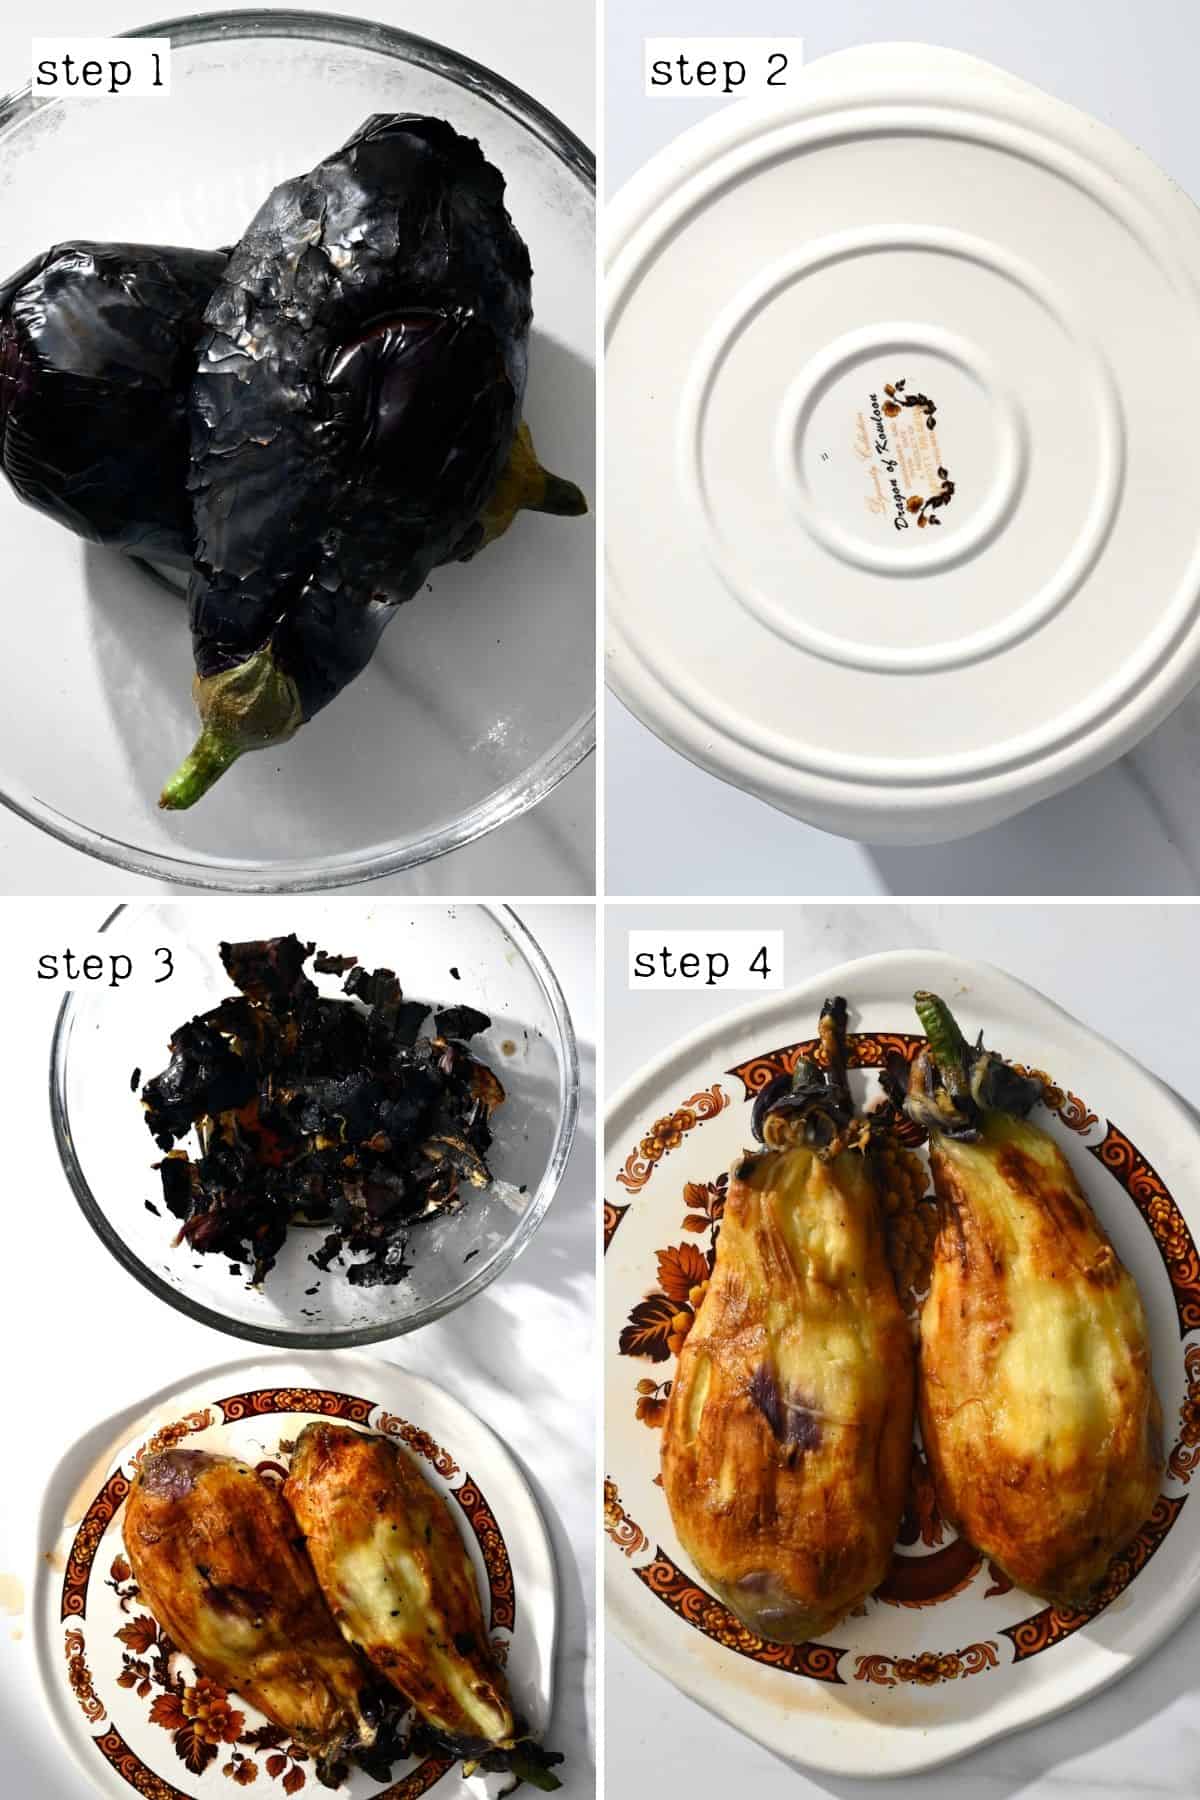 Steps for peeling charred eggplants